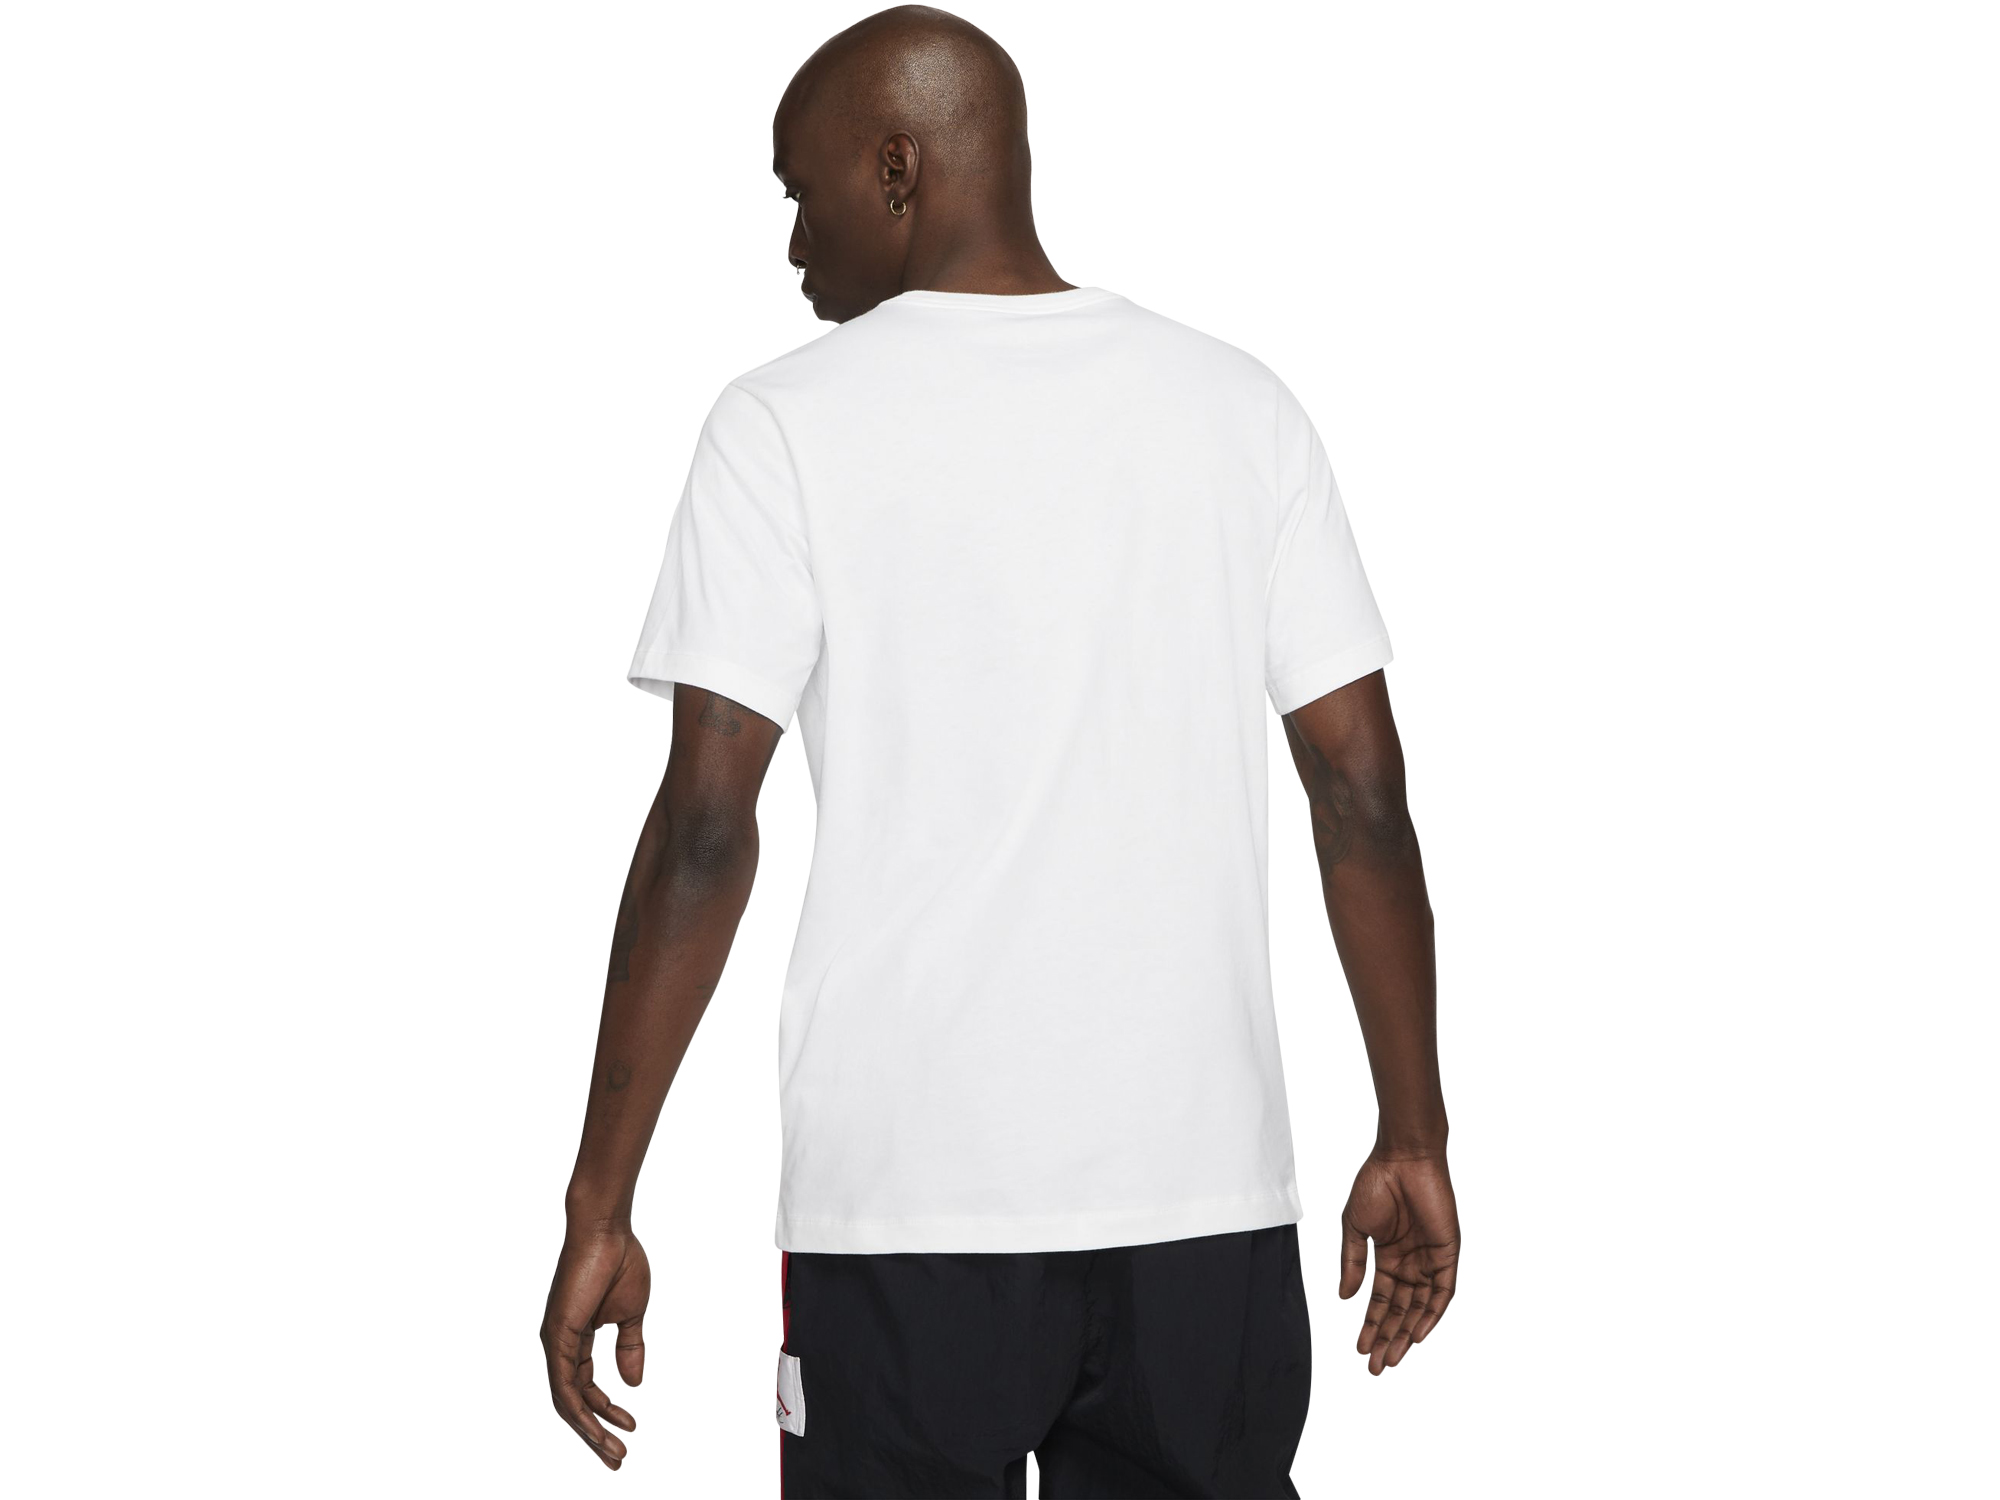 Jordan AJ5 '85 Graphic T-Shirt